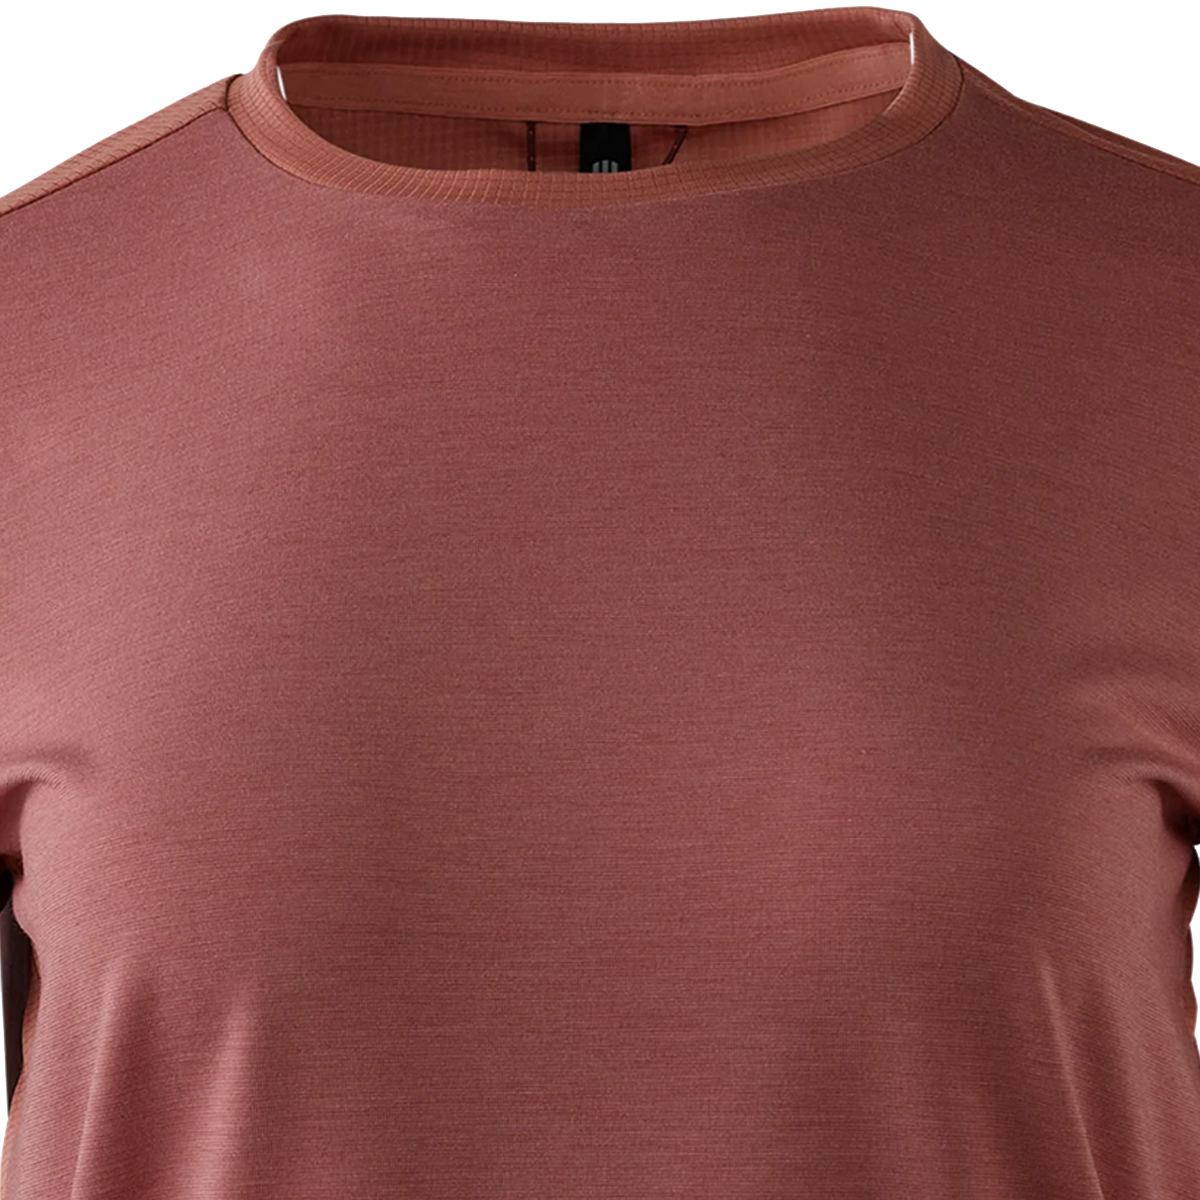 Women's Composite Short Sleeve Jersey alternate view